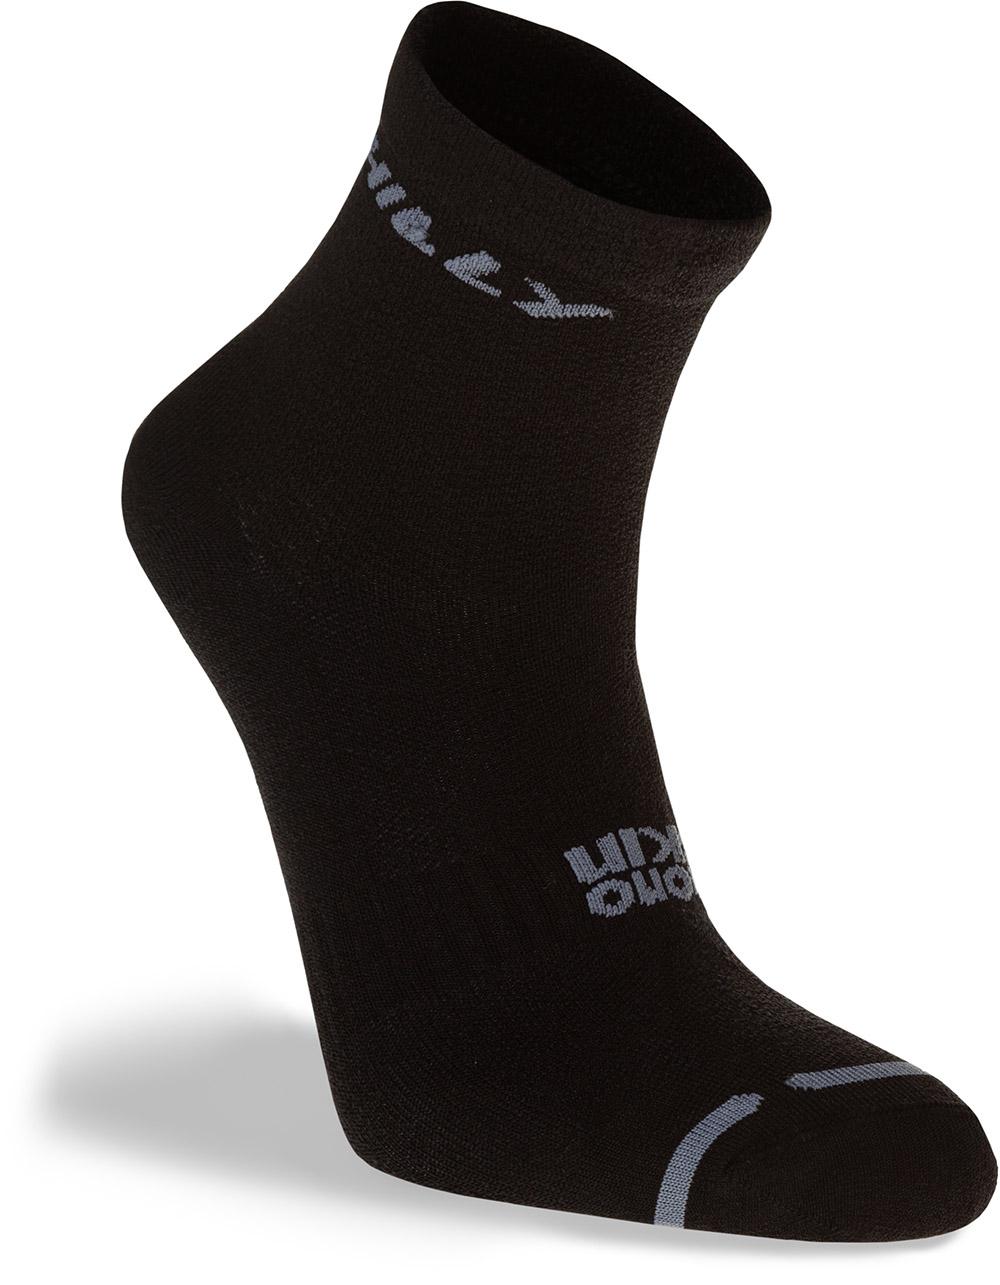 Hilly Active Anklet - Black/grey